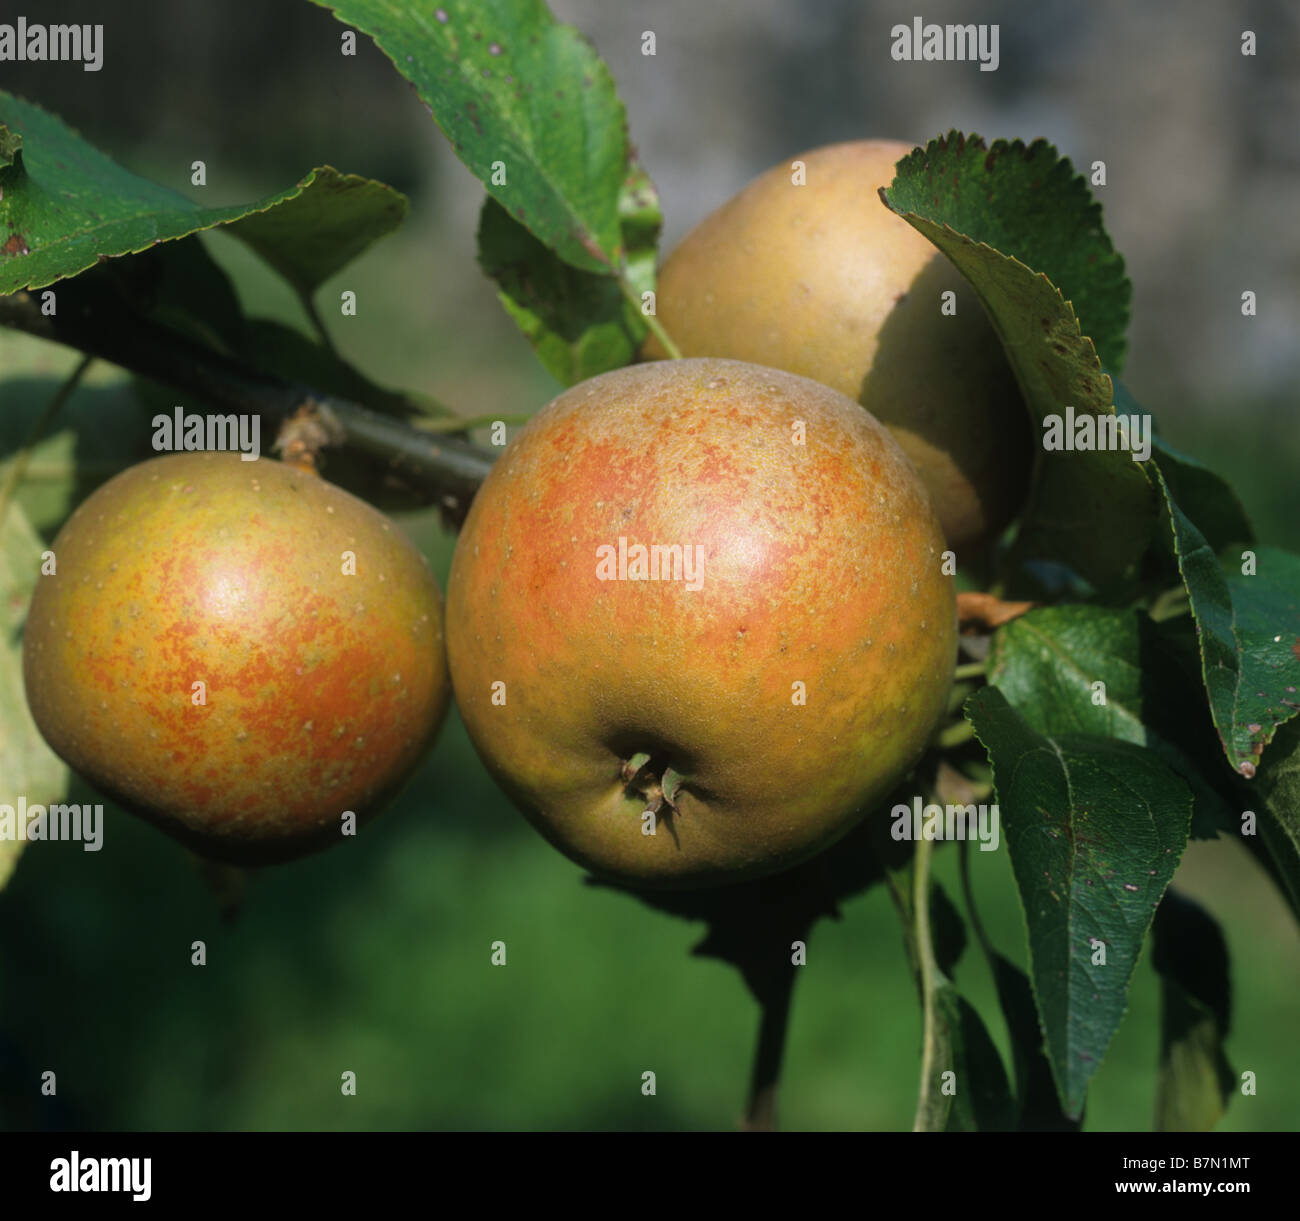 Ripe 'Egremont Russet' apples on the tree, Devon Stock Photo